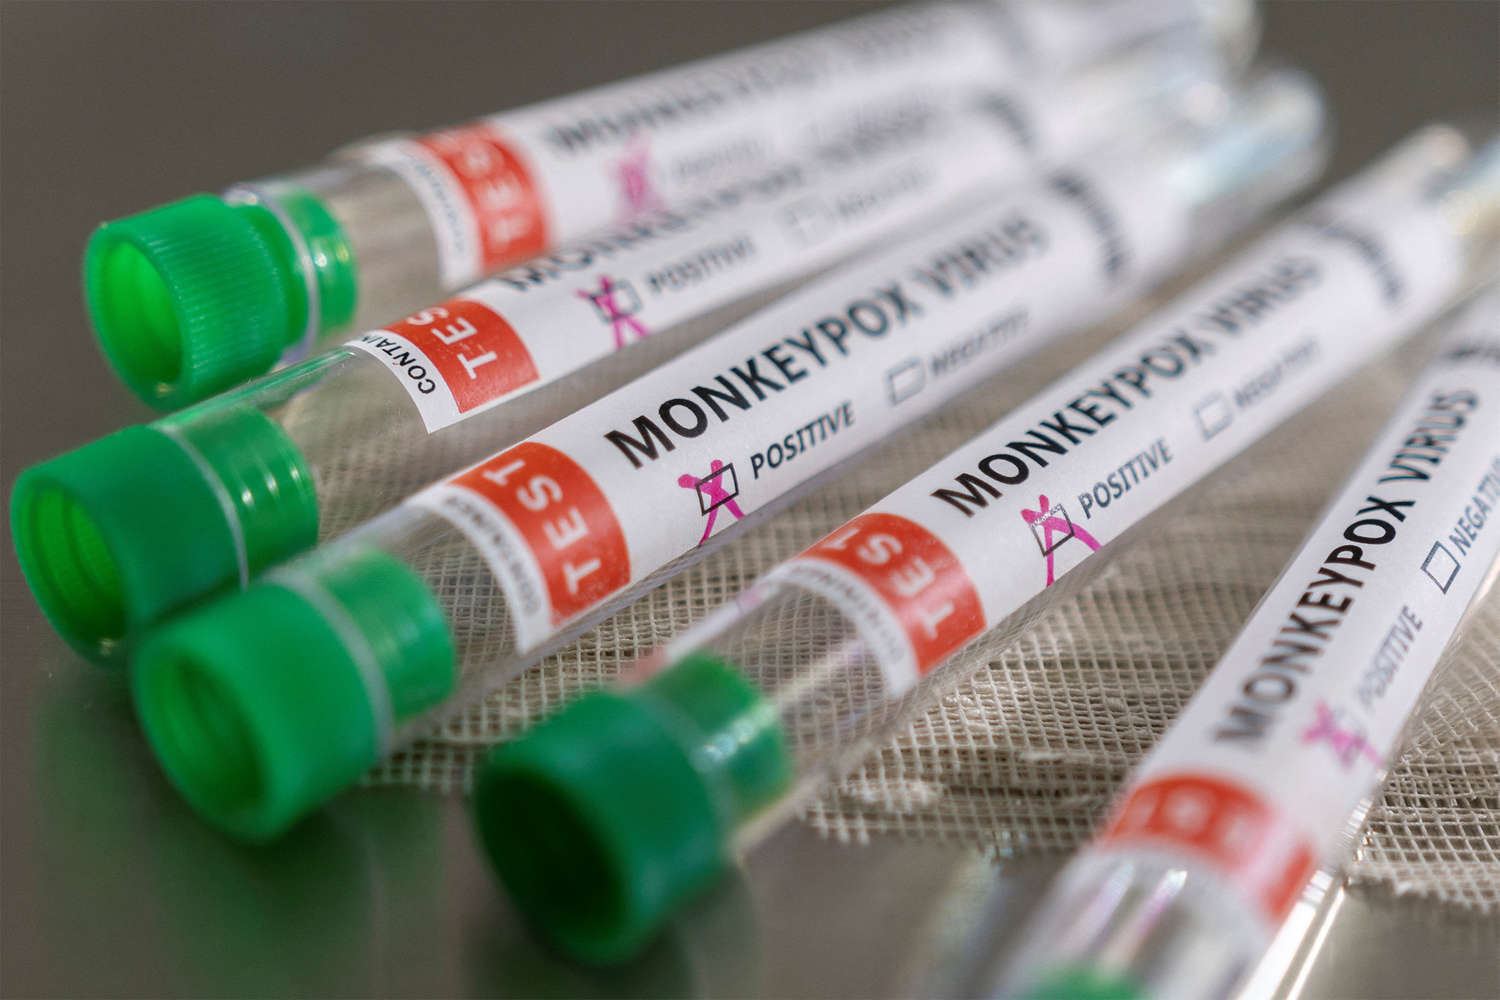 U.S. reports over 70 monkeypox infections